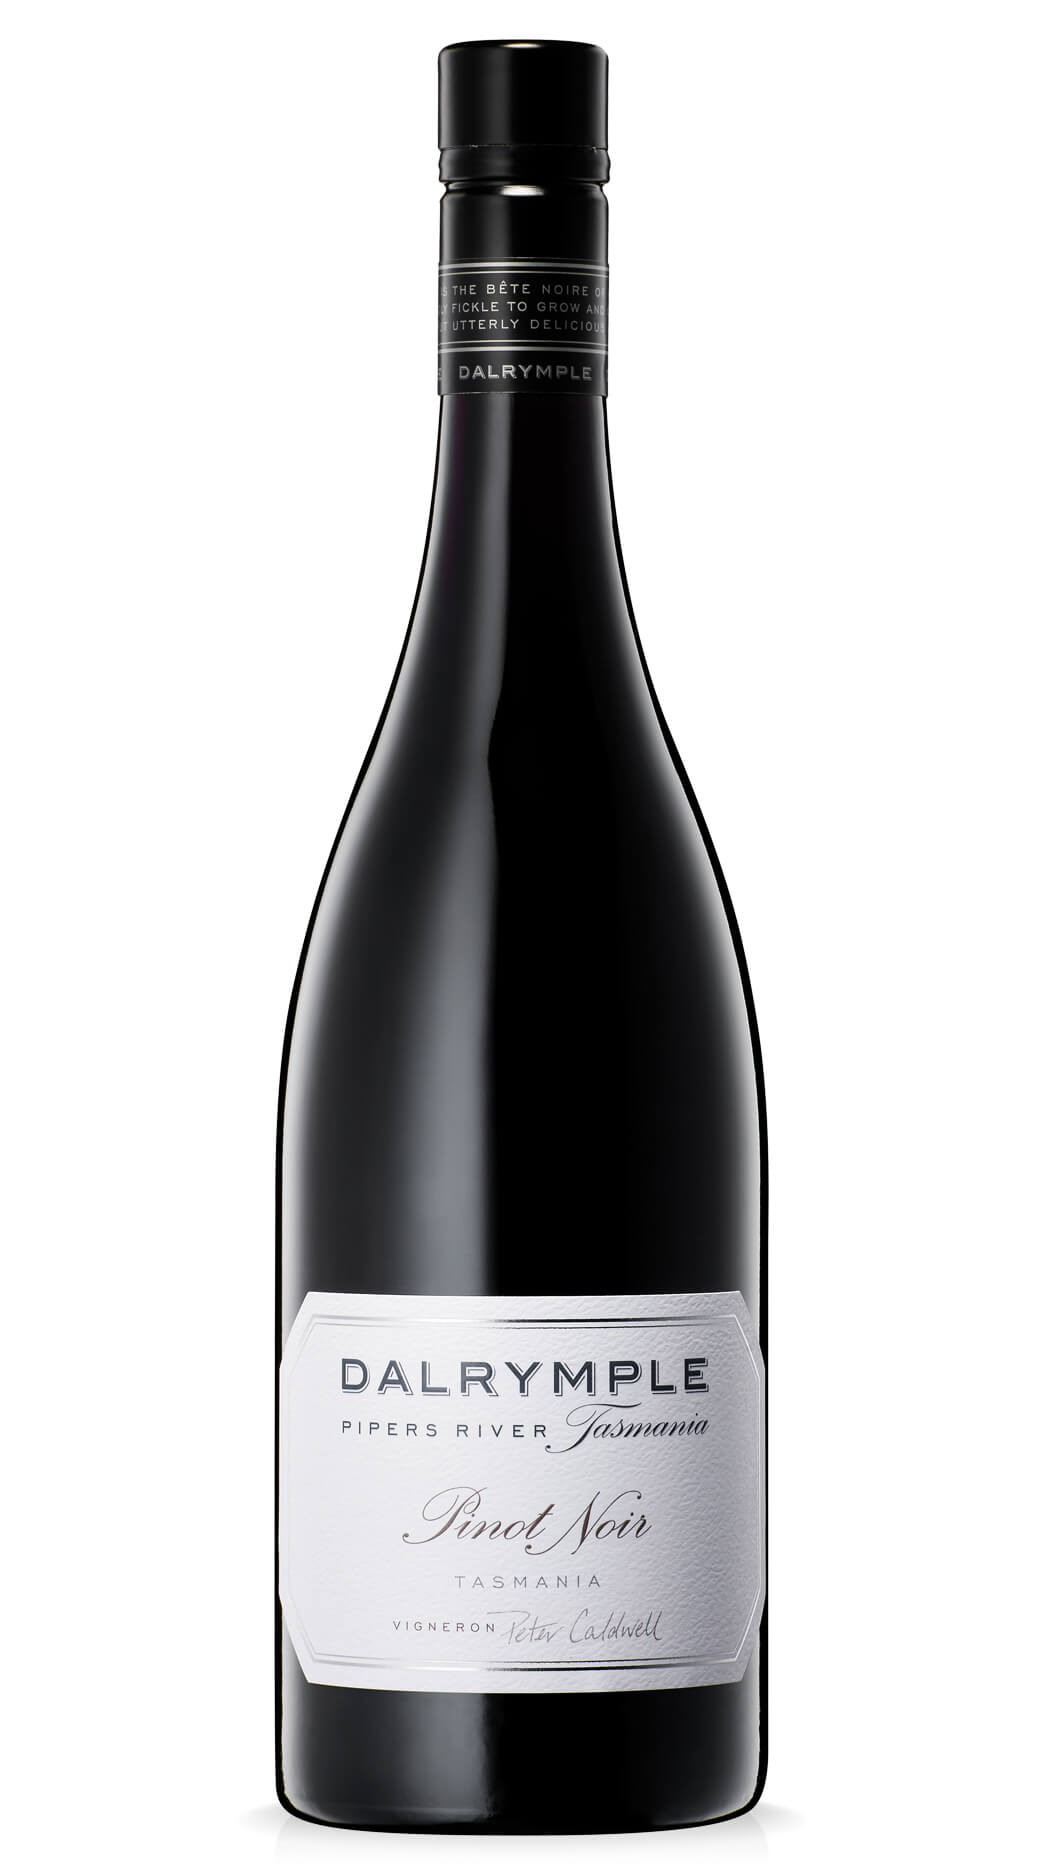 Dalrymple Pinot Noir 75cl 2015